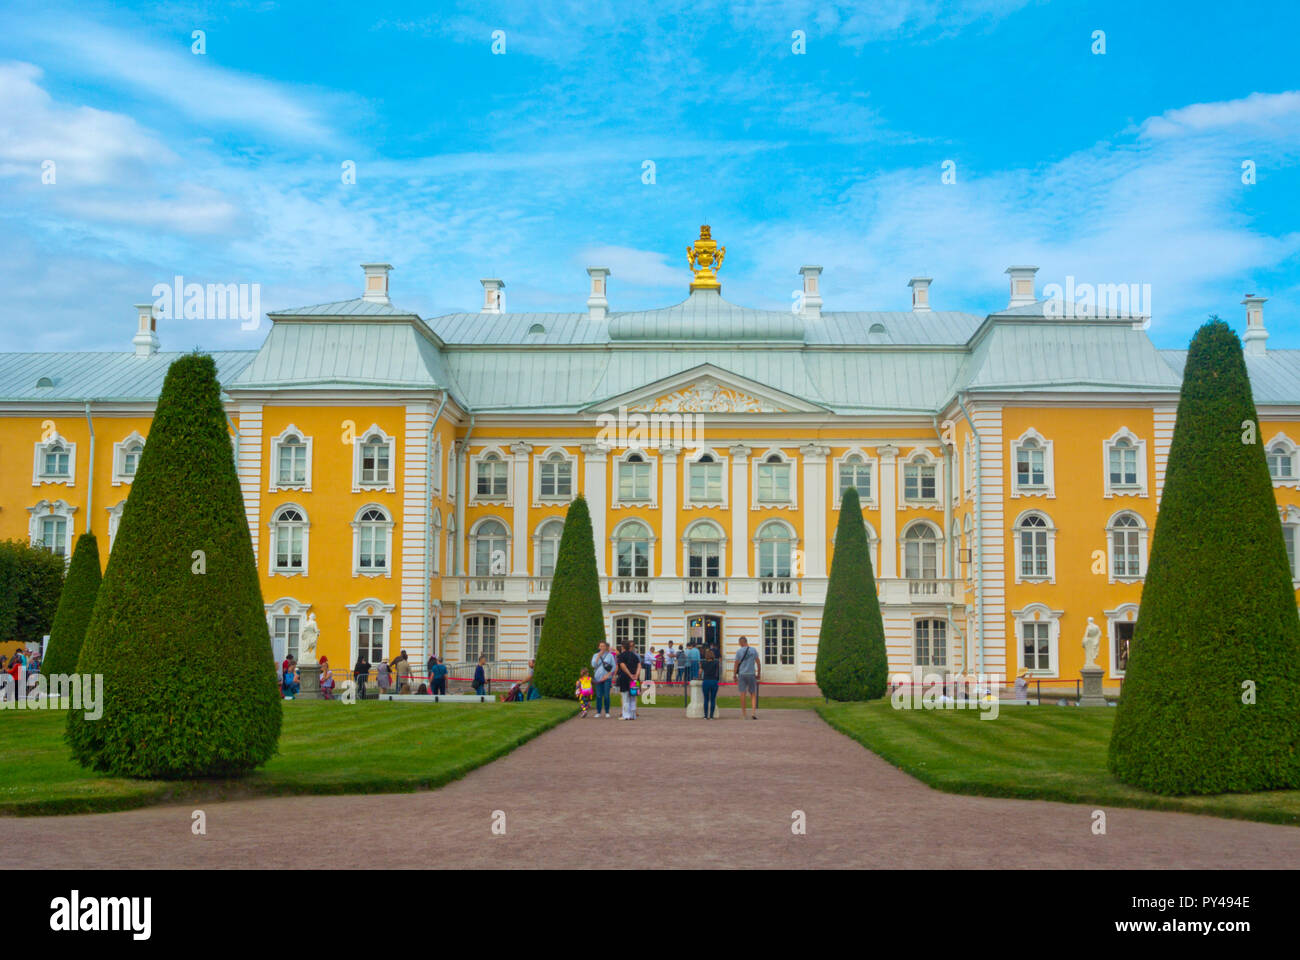 Il Grand Palace, Peterhof, nei pressi di San Pietroburgo, Russia Foto Stock